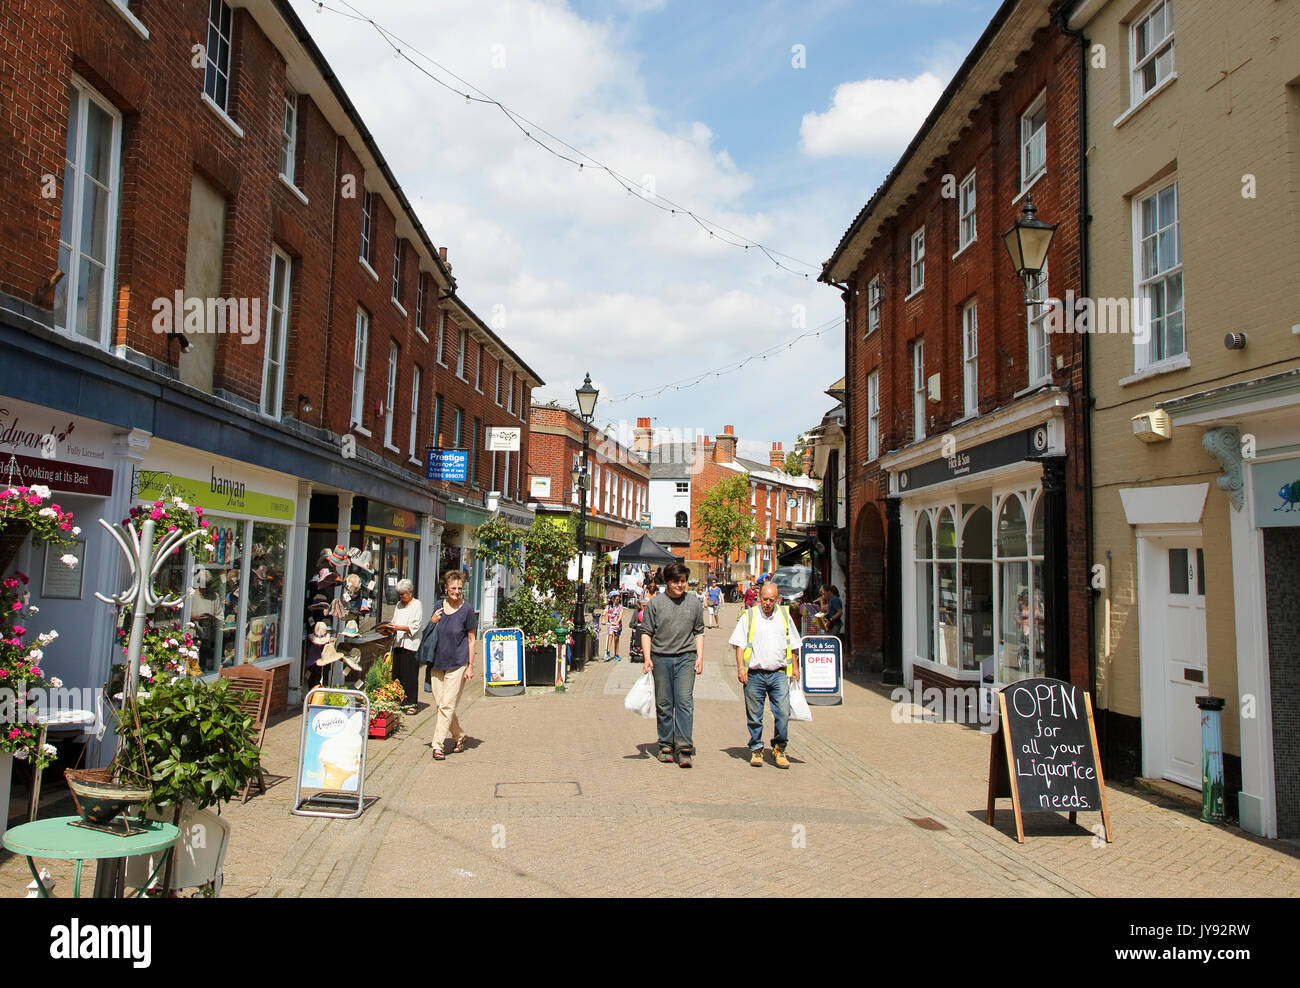 The main pedestrianised shopping street, Halesworth, Suffolk, England, UK Stock Photo